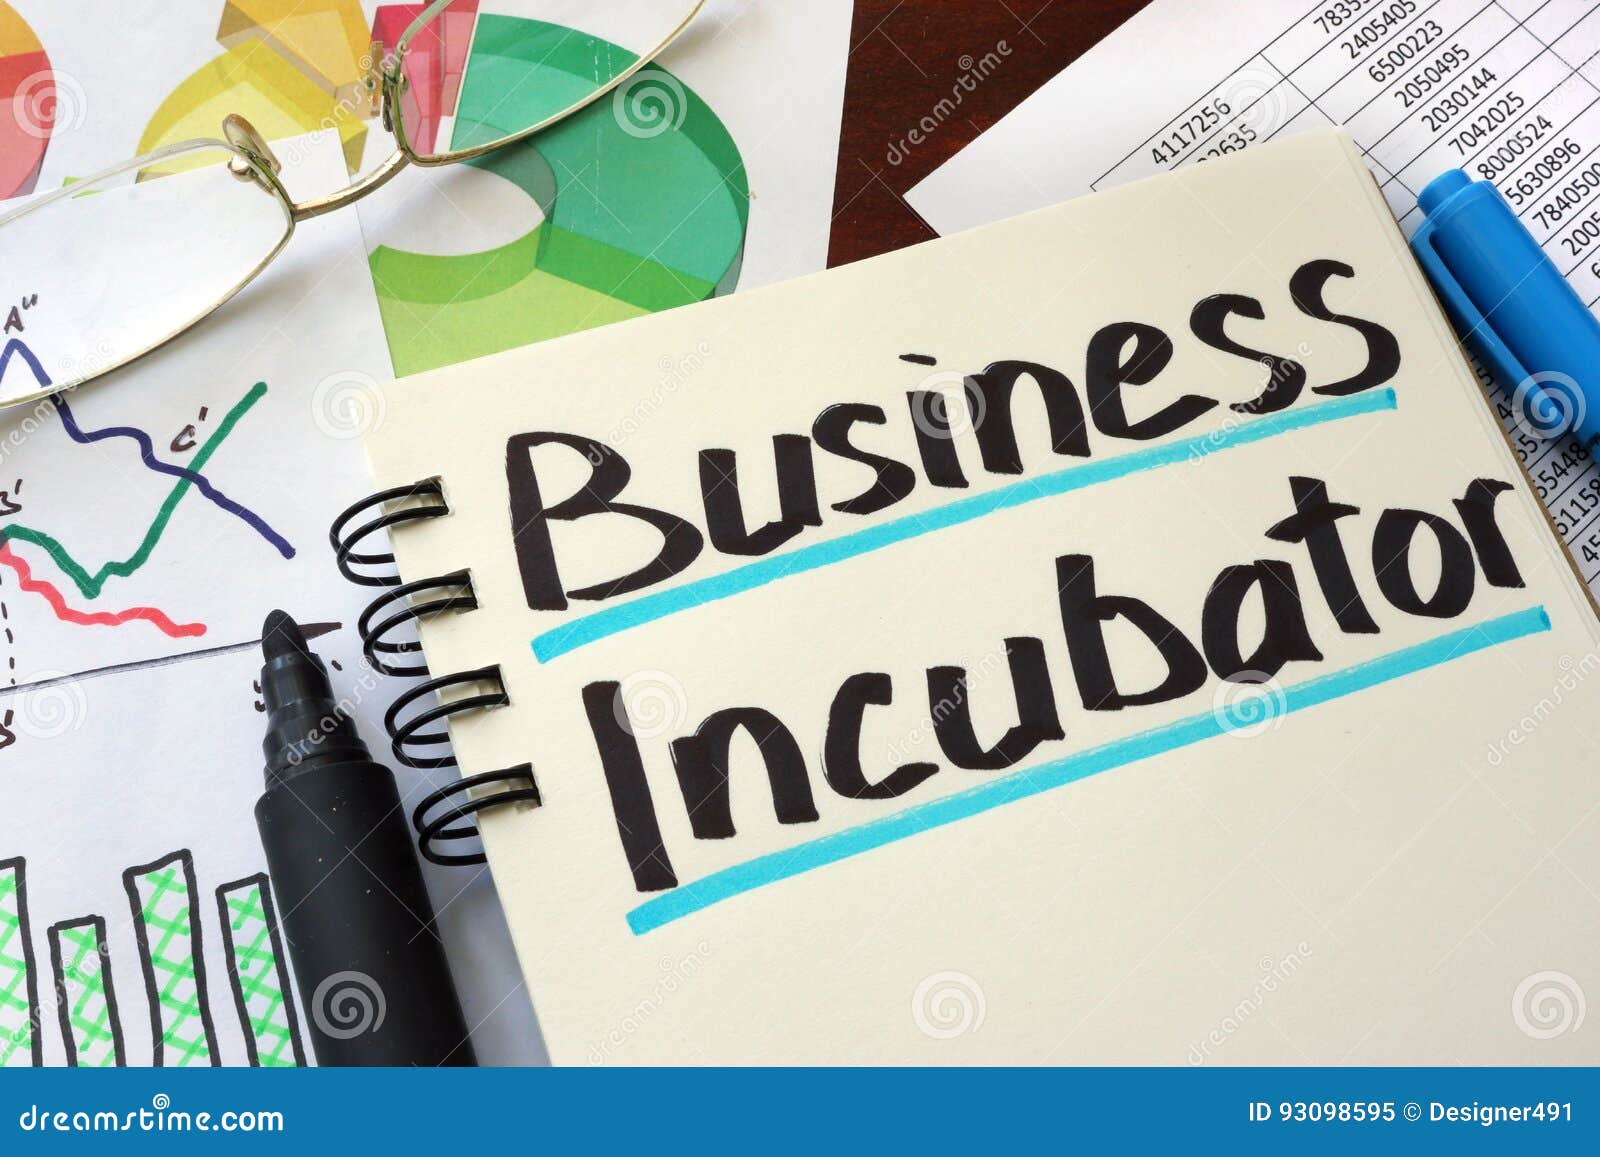 business incubator